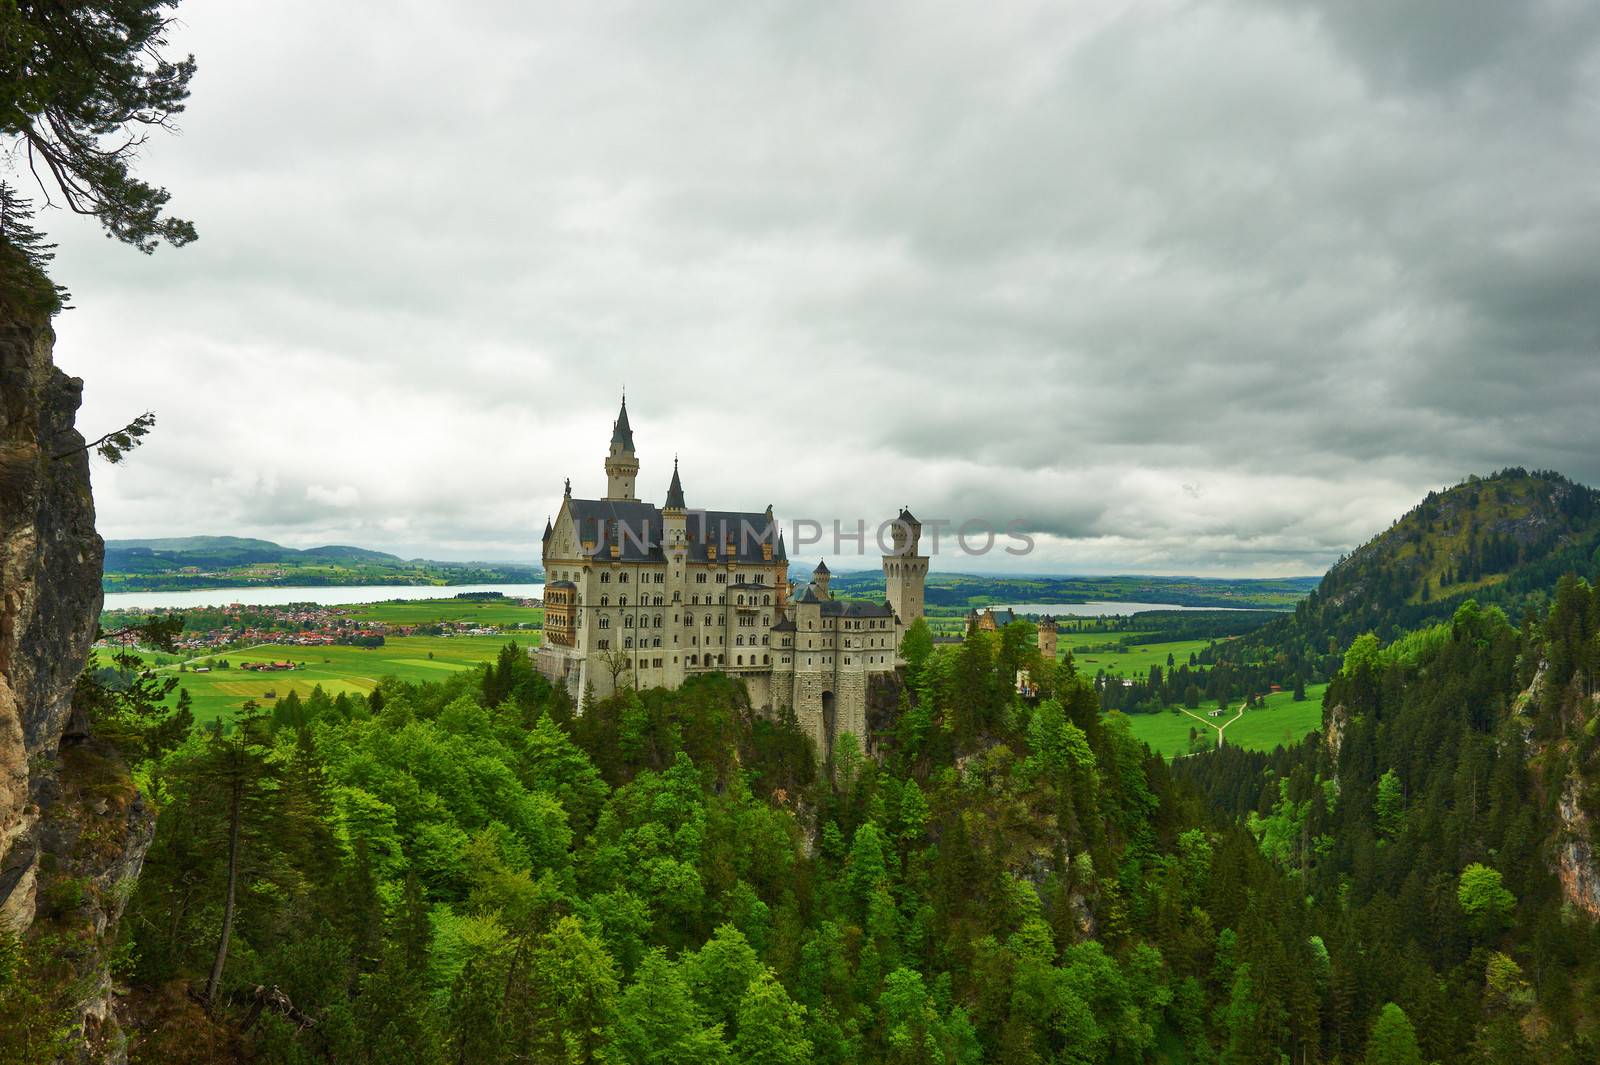 The castle of Neuschwanstein in Germany by haveseen